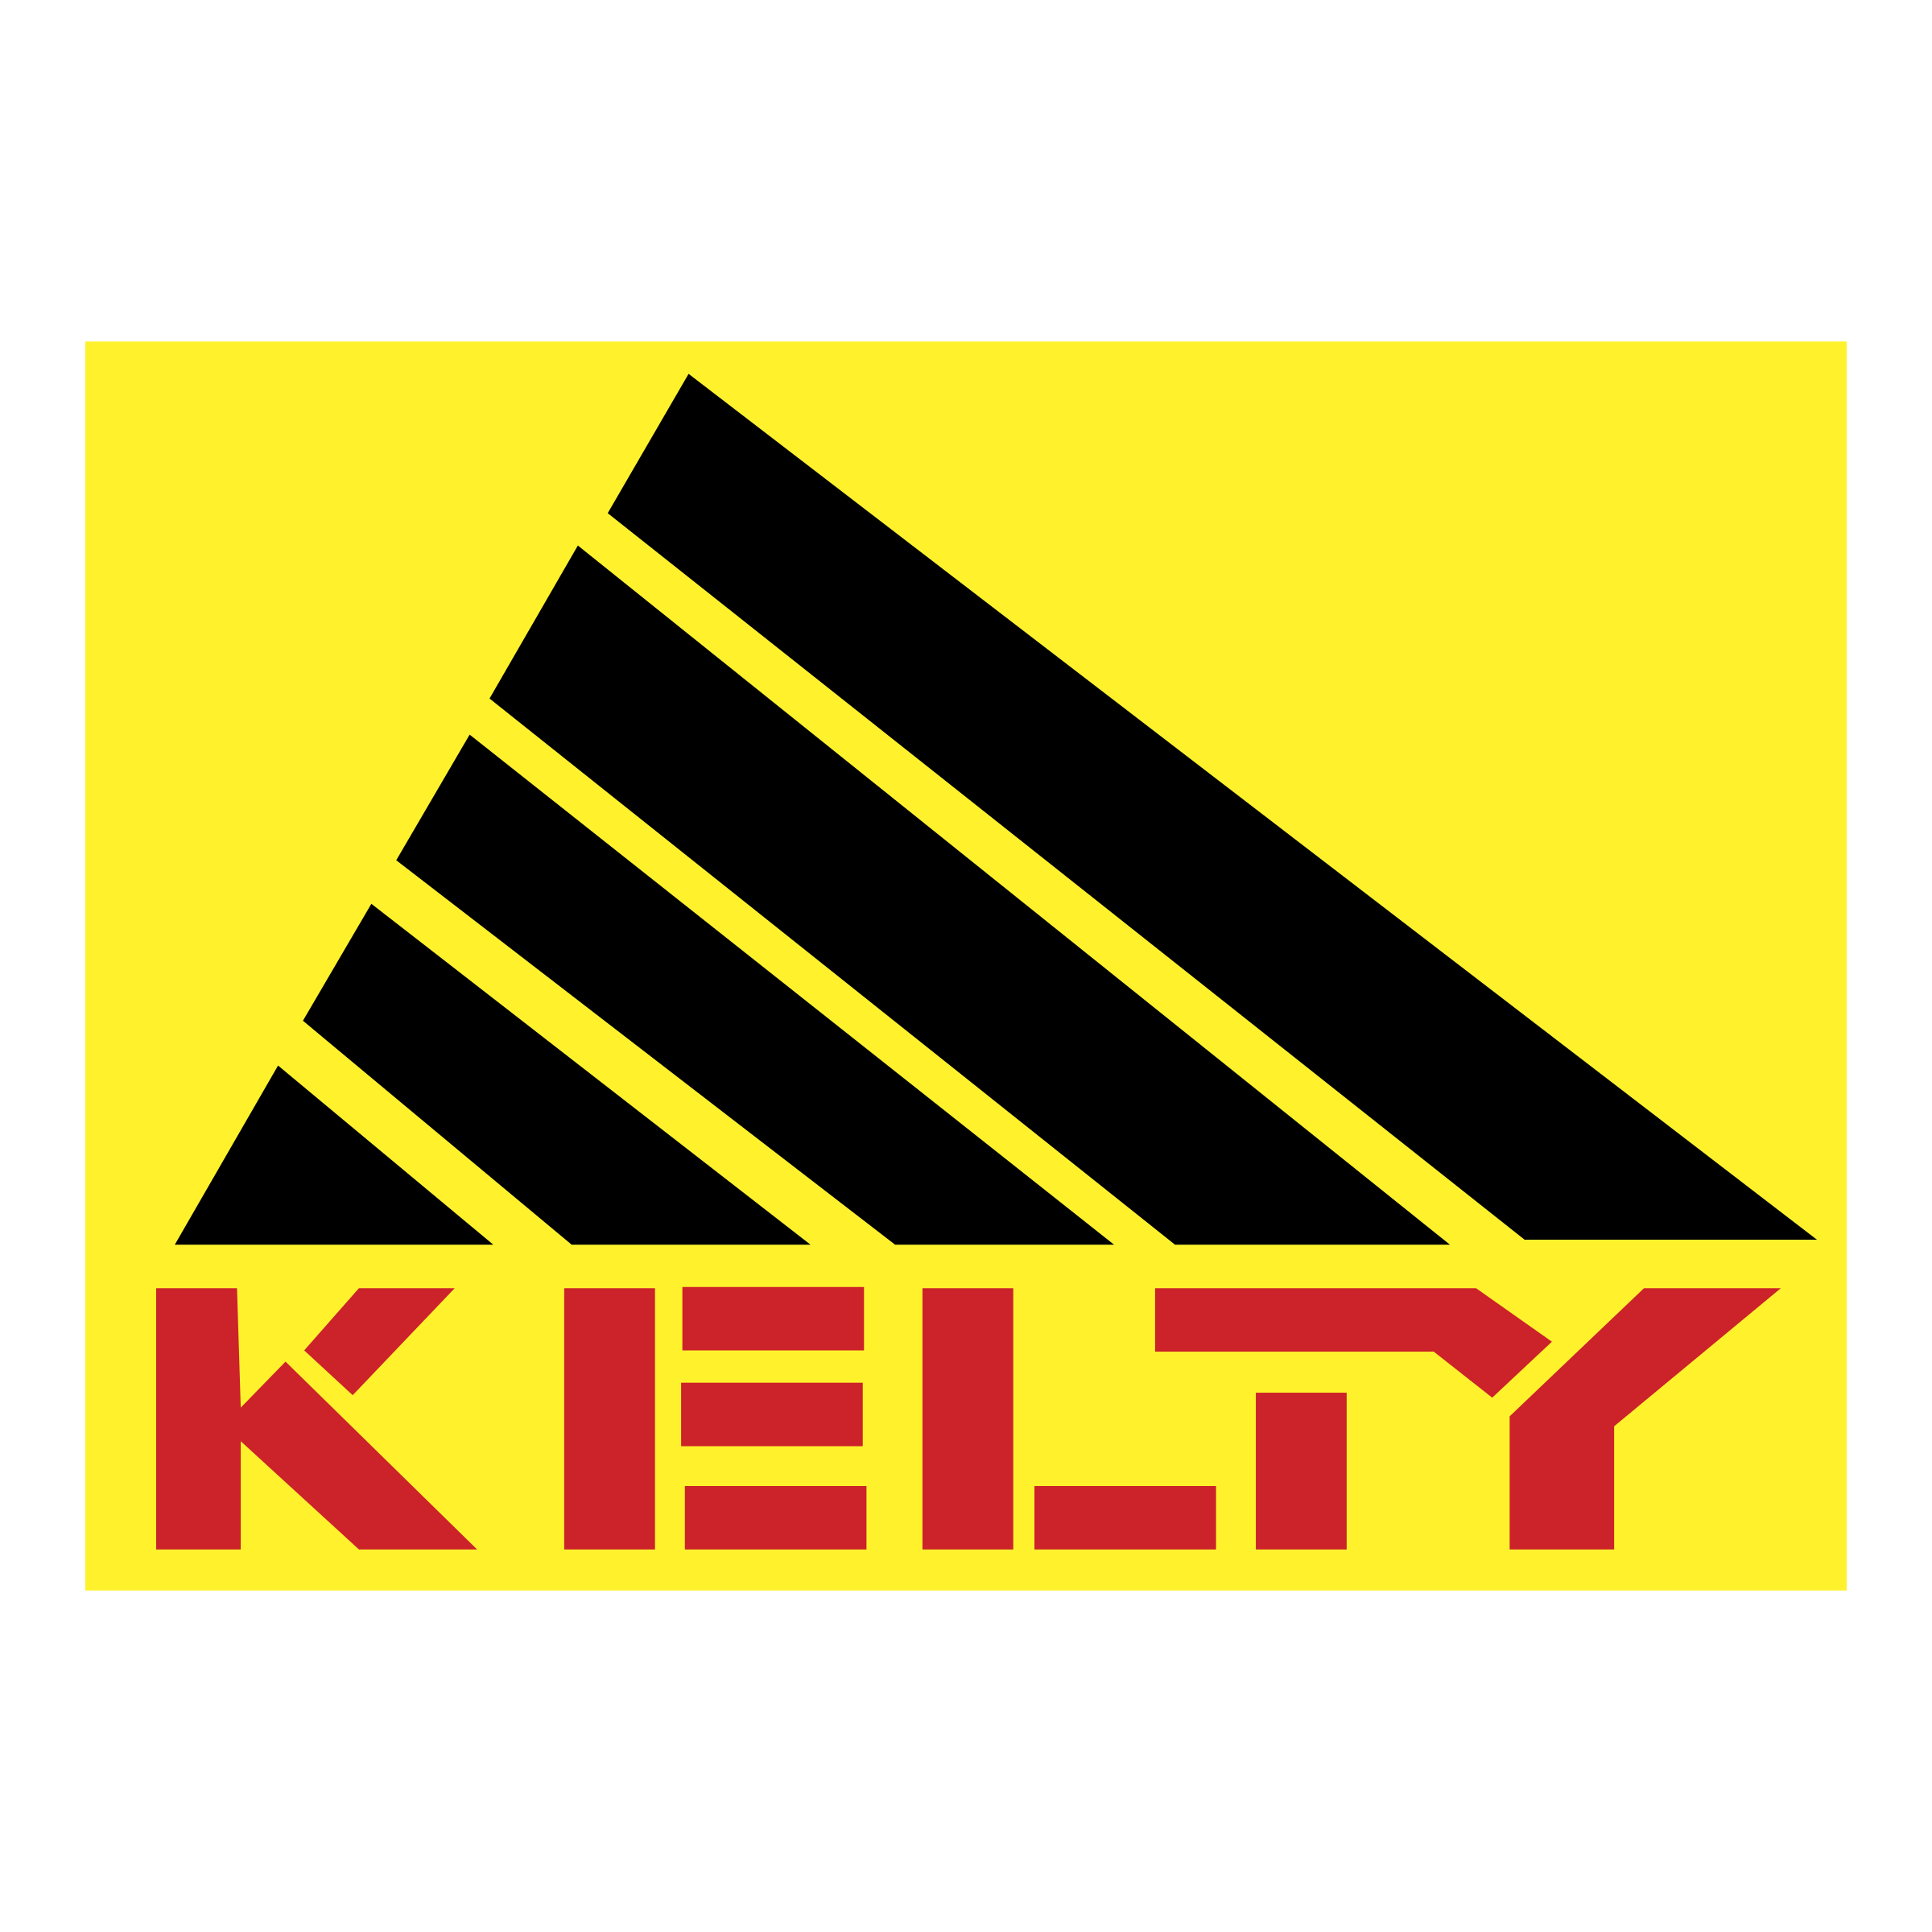 Kelty Logo - Kelty Logo PNG Transparent & SVG Vector - Freebie Supply